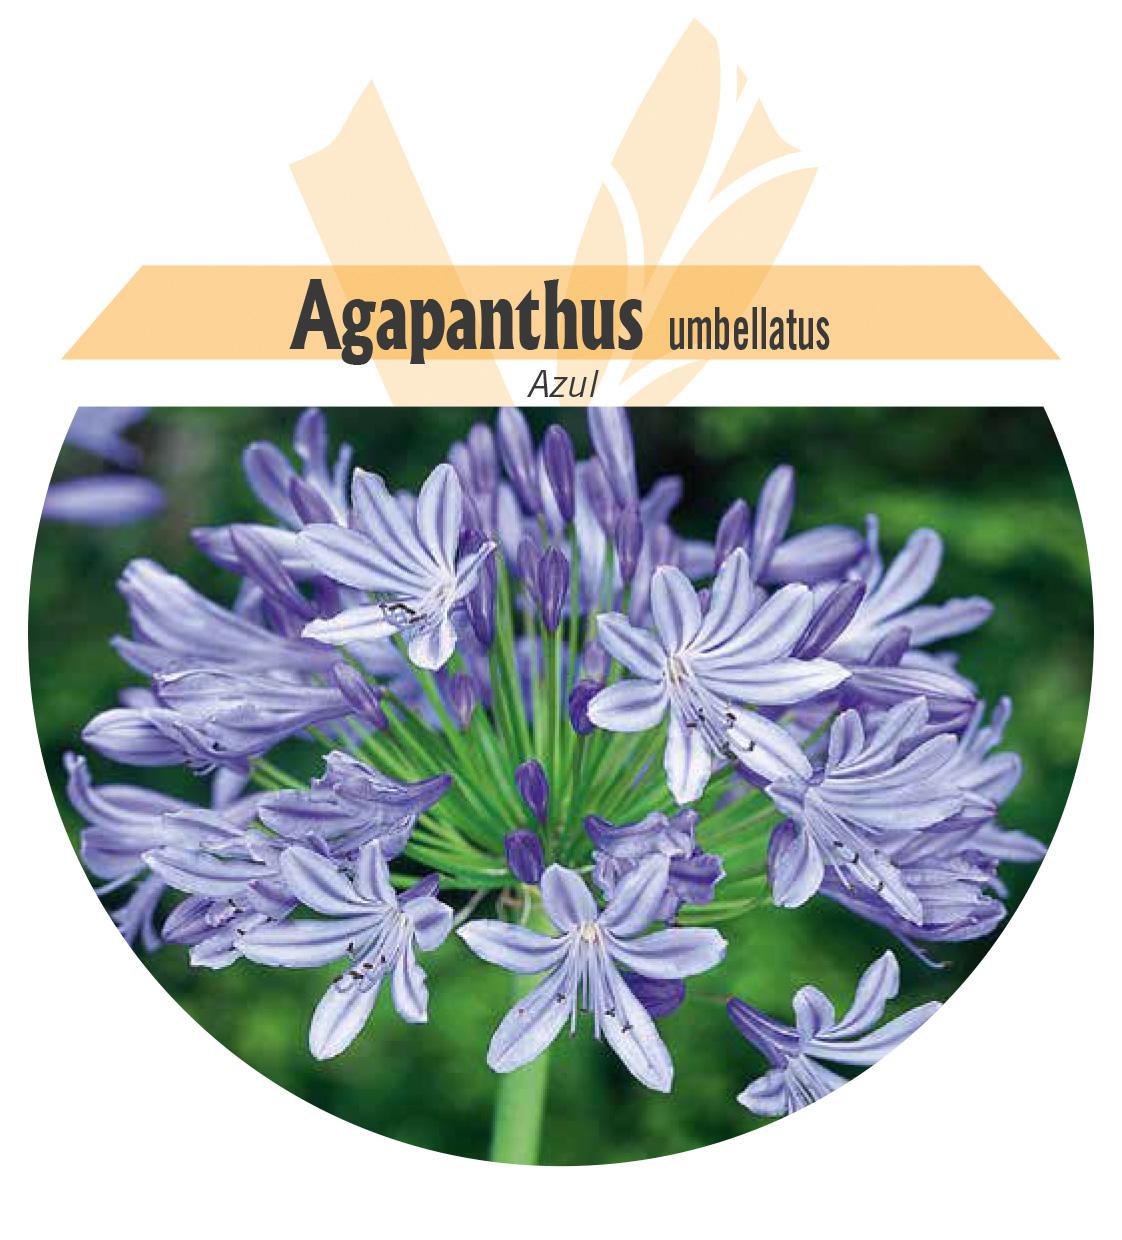 Agapanthus umbellatus